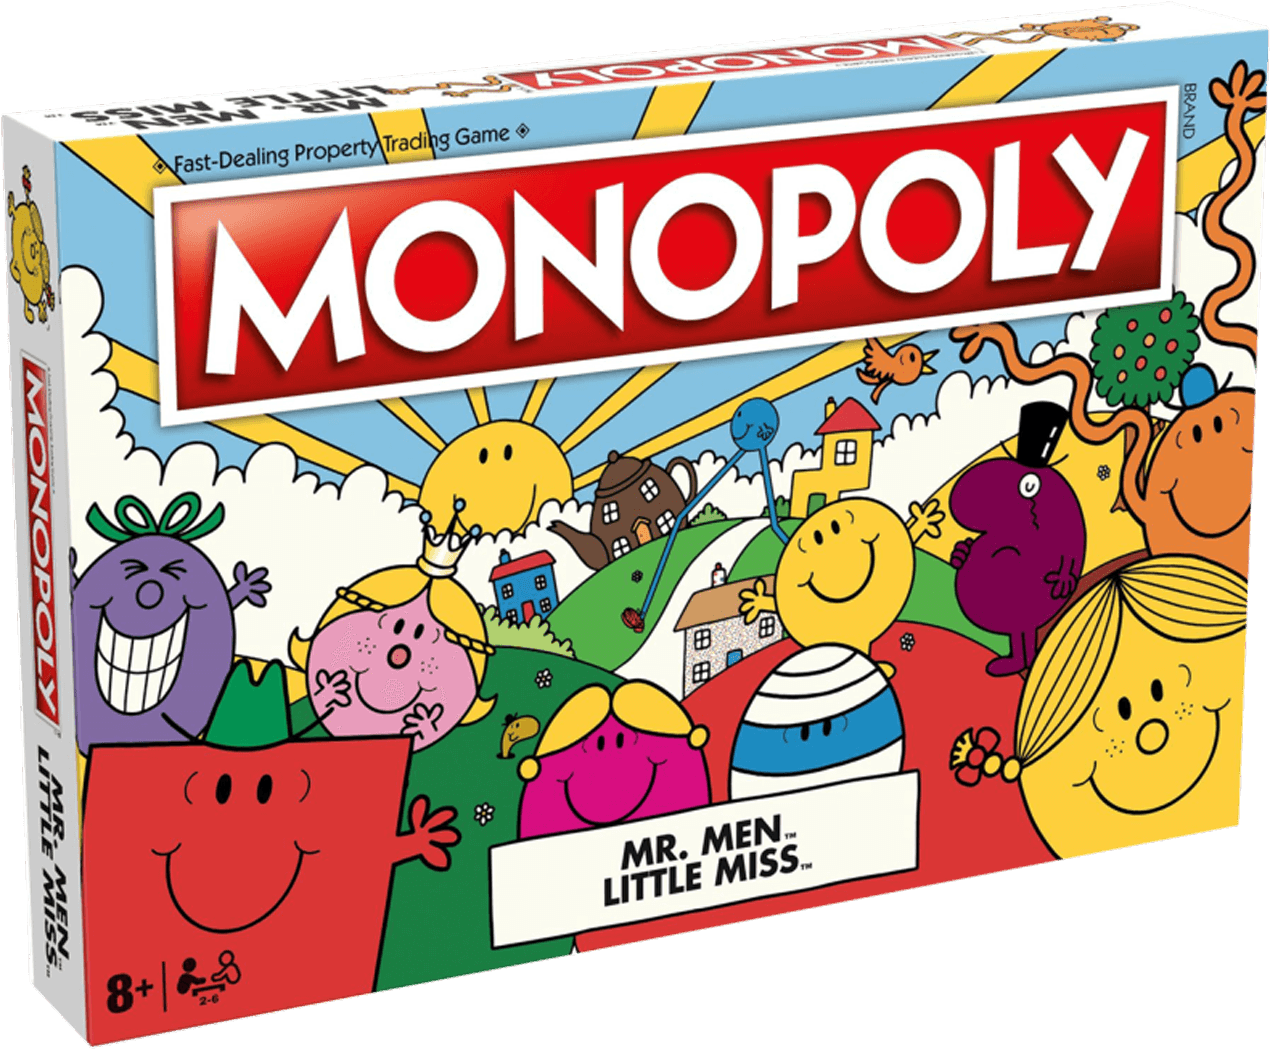 WINWM03274 Monopoly - Mr Men & Little Miss Edition - Winning Moves - Titan Pop Culture